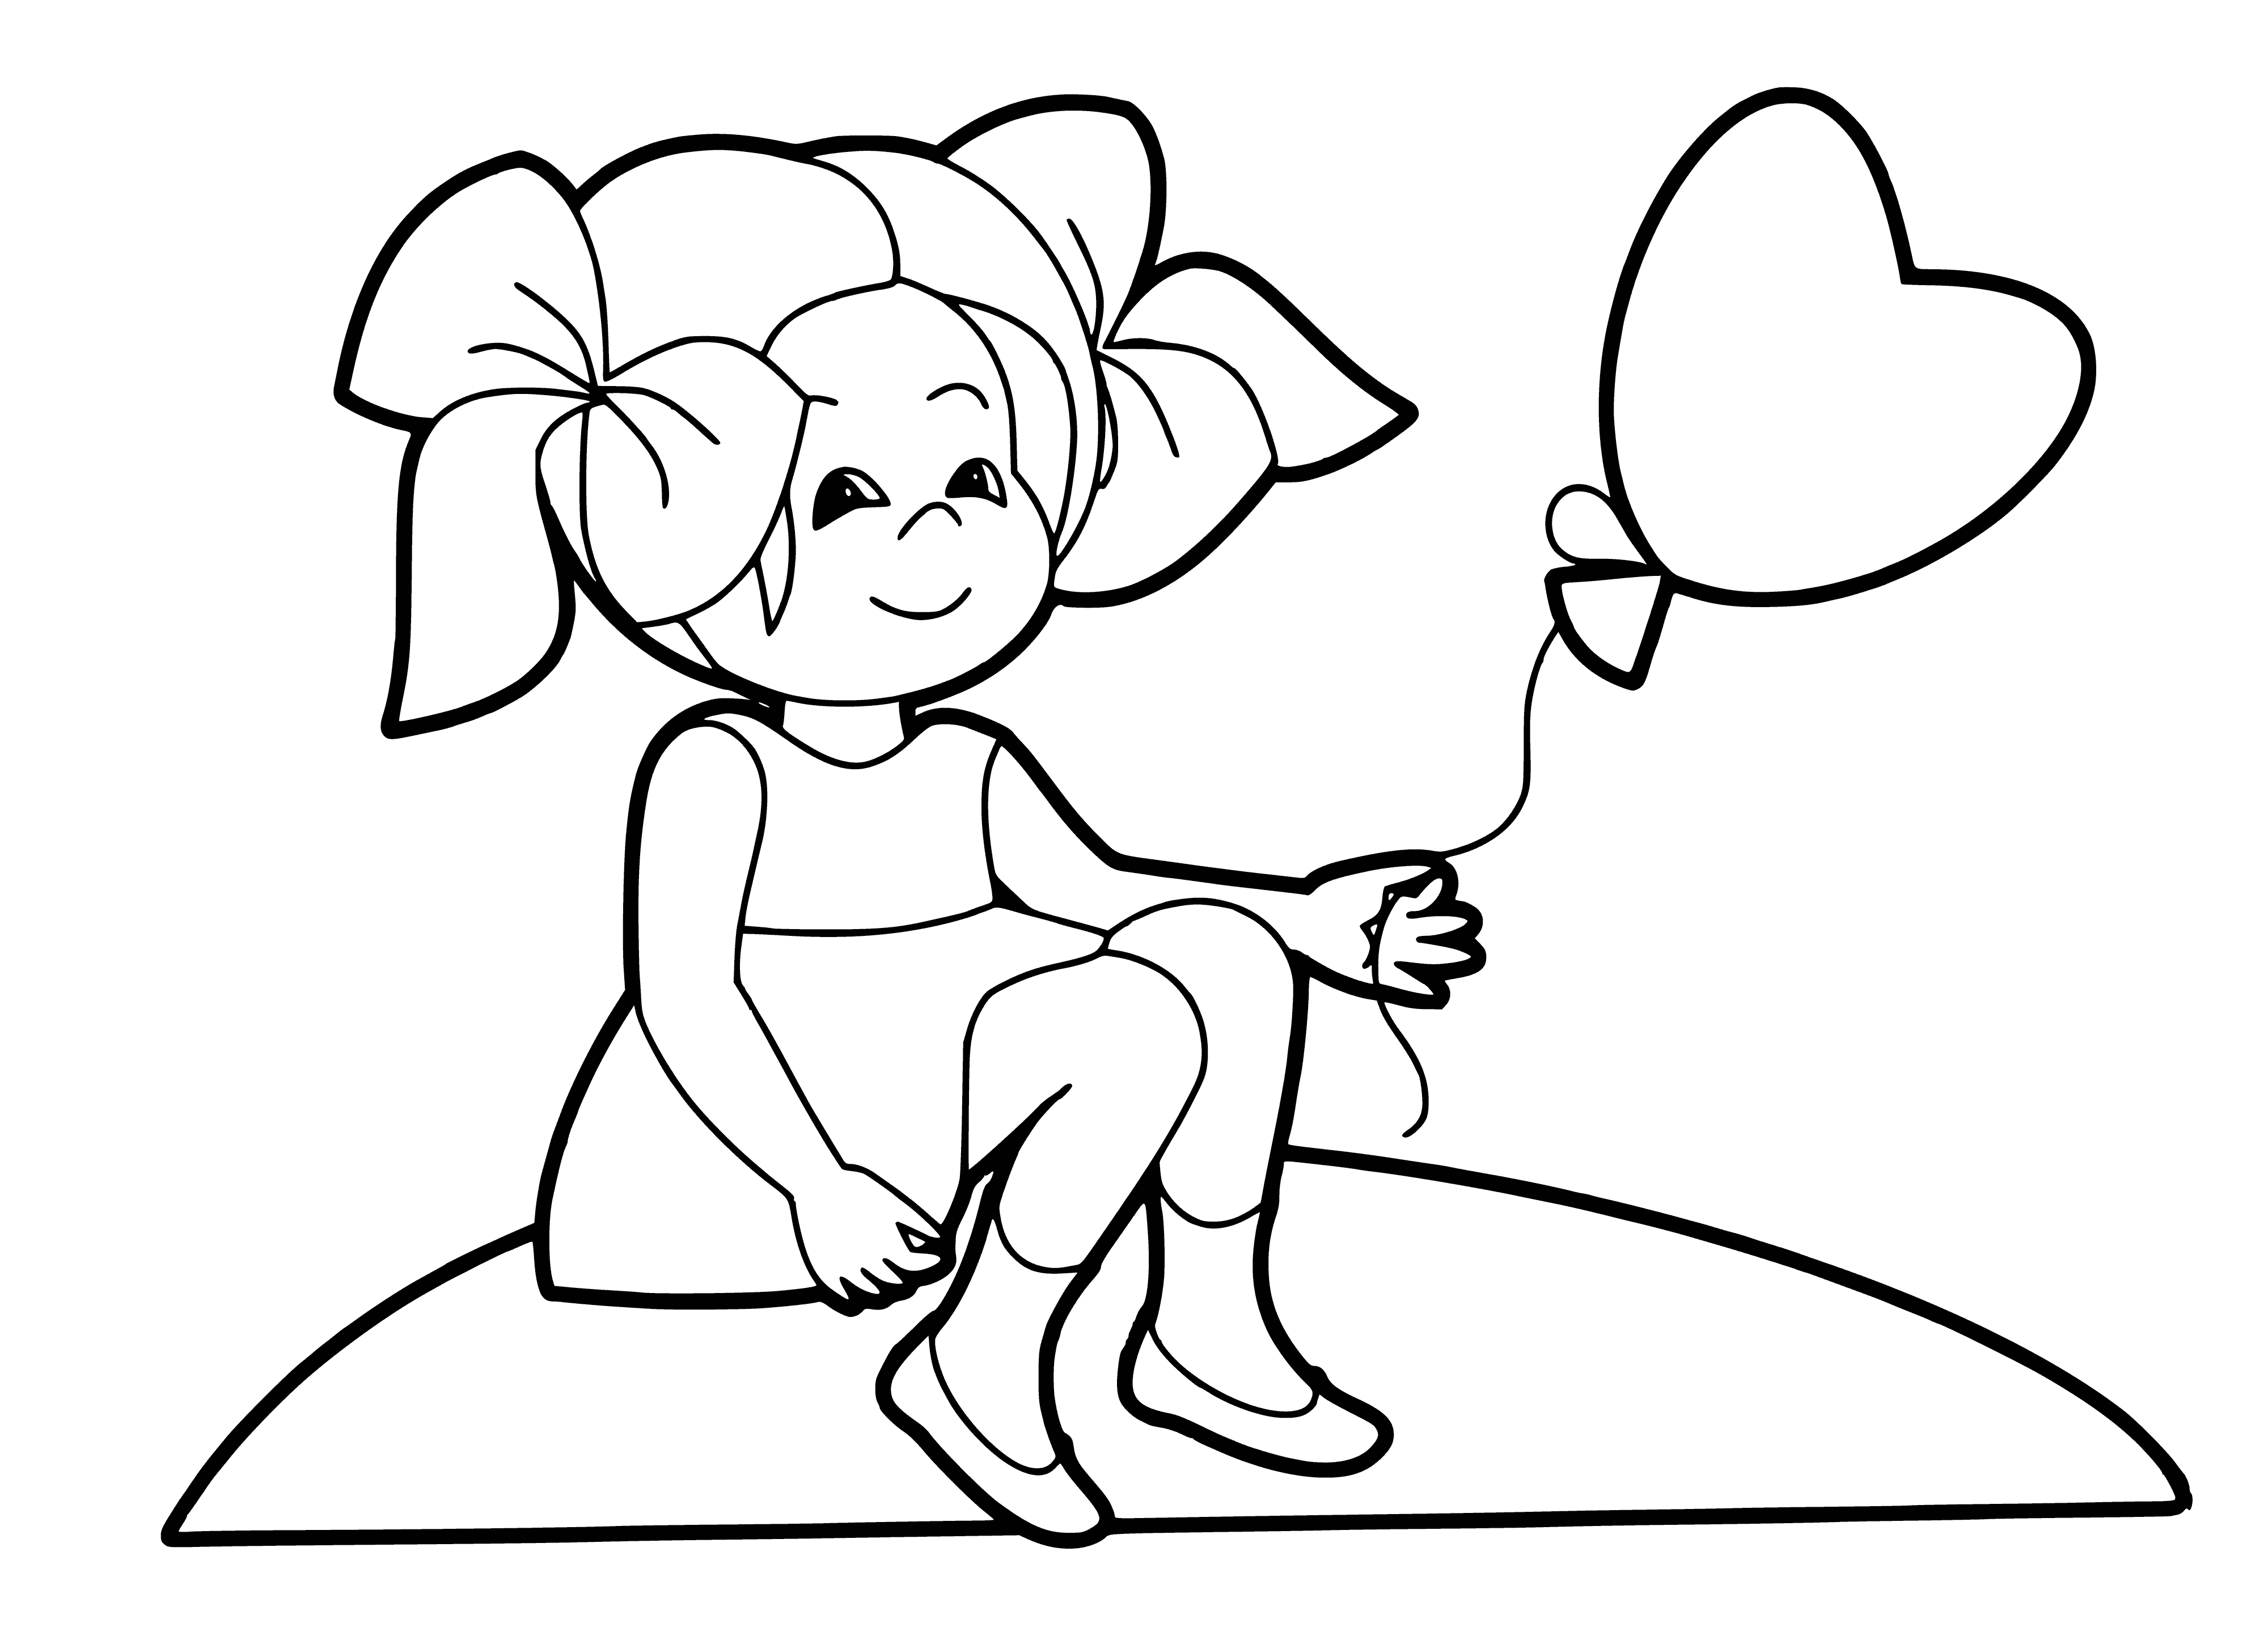 Balloon girl coloring page